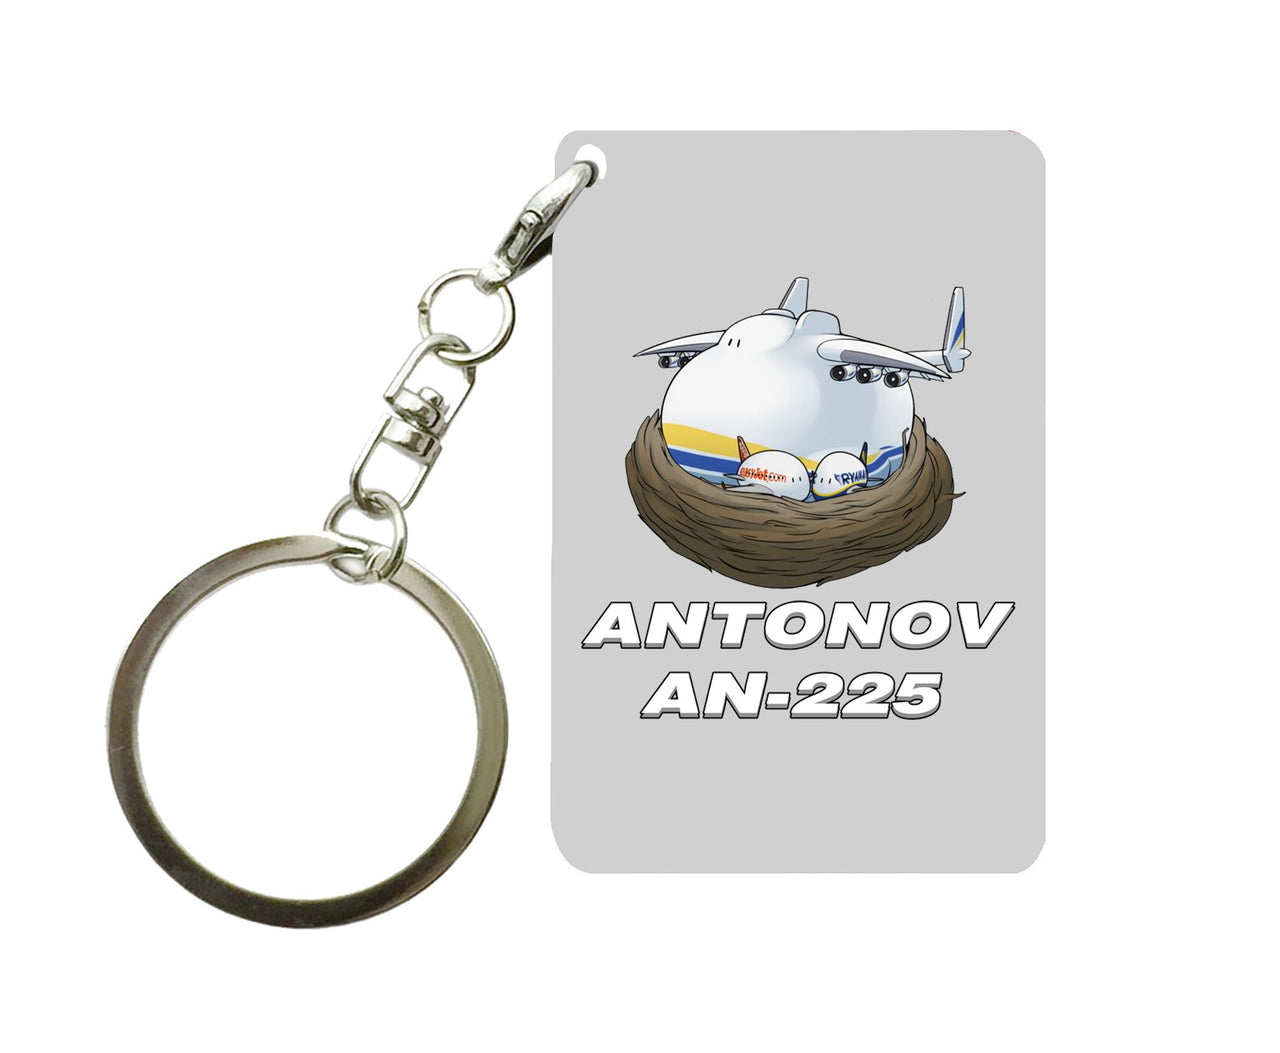 Antonov AN-225 (22) Designed Key Chains